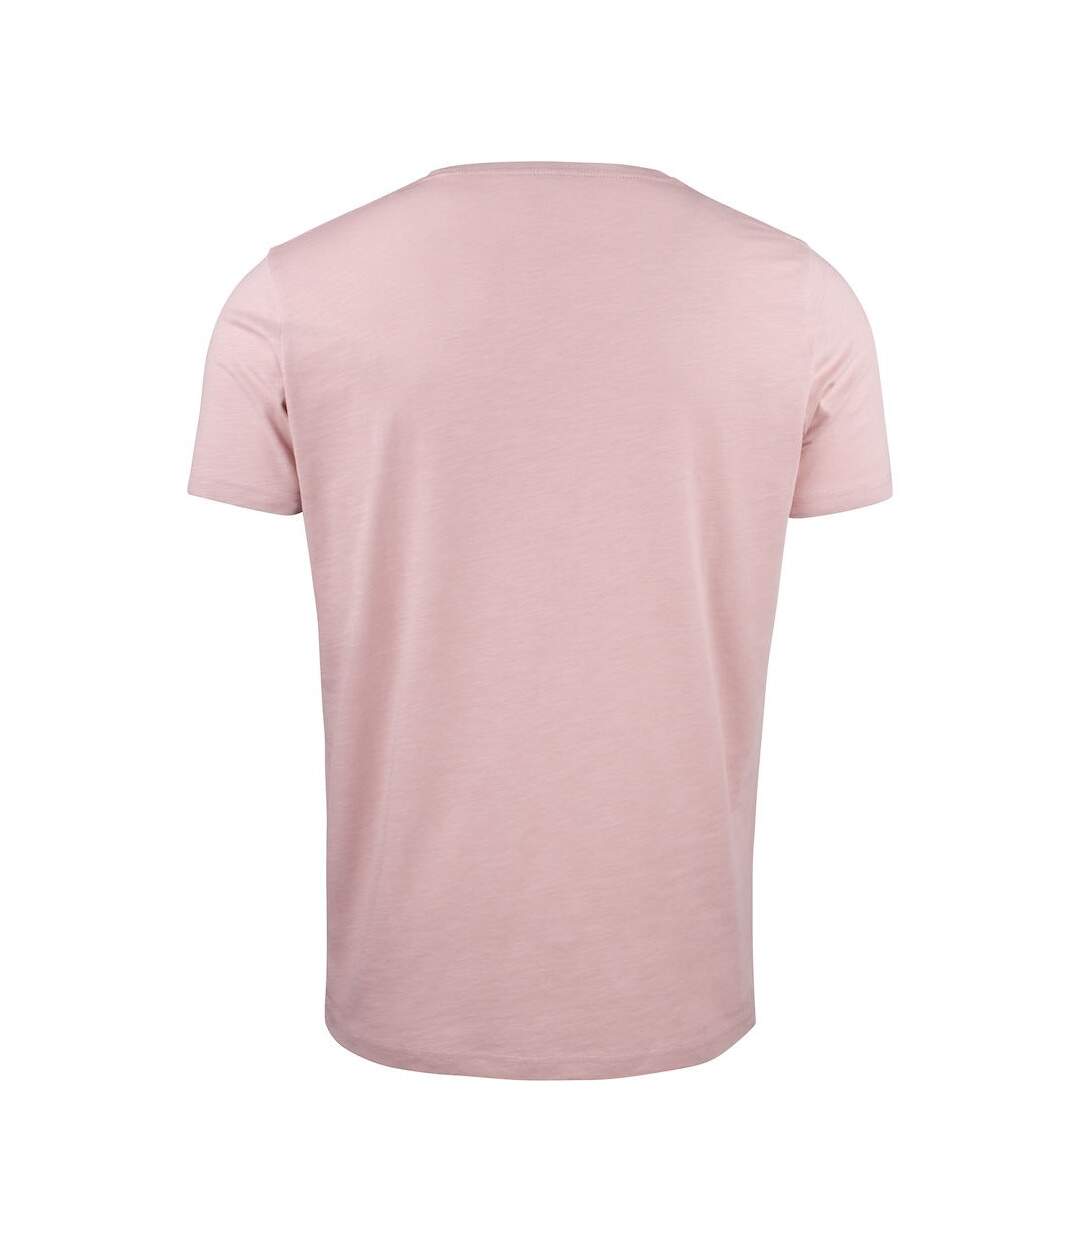 James Harvest - T-shirt TWOVILLE - Homme (Vieux rose) - UTUB252